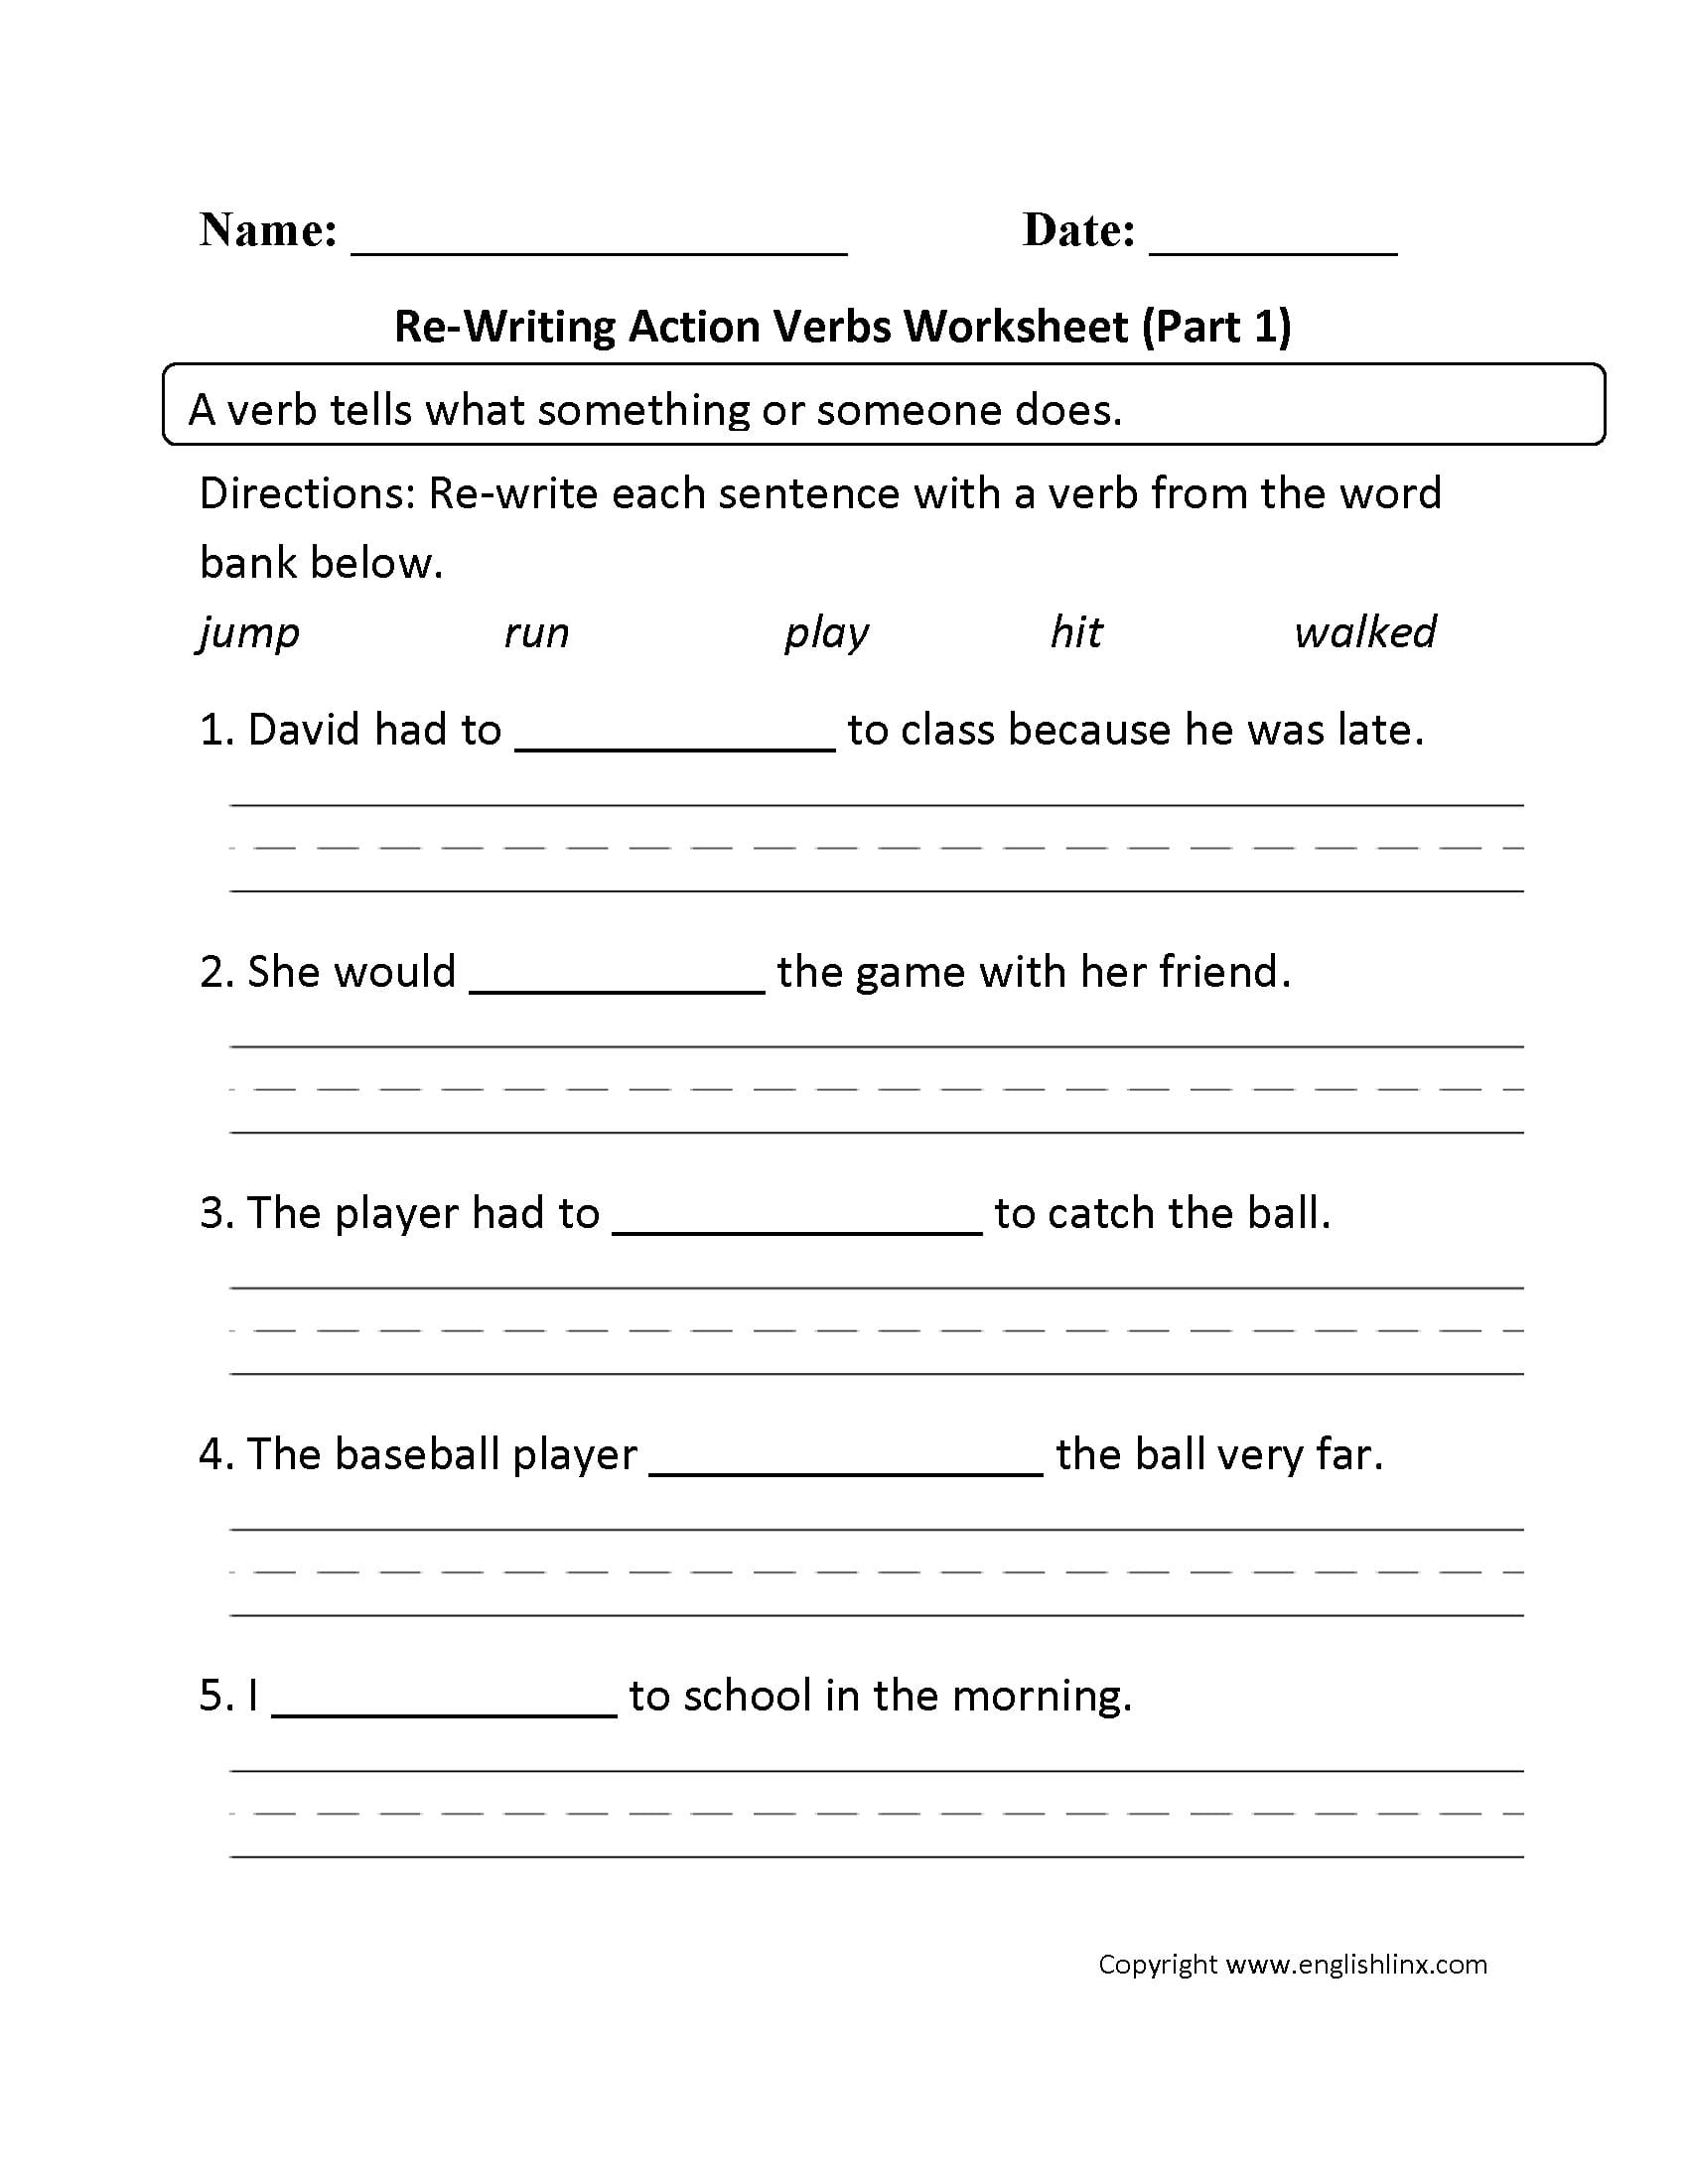 Verbs Worksheets  Action Verbs Worksheets For Verbs Worksheet Pdf